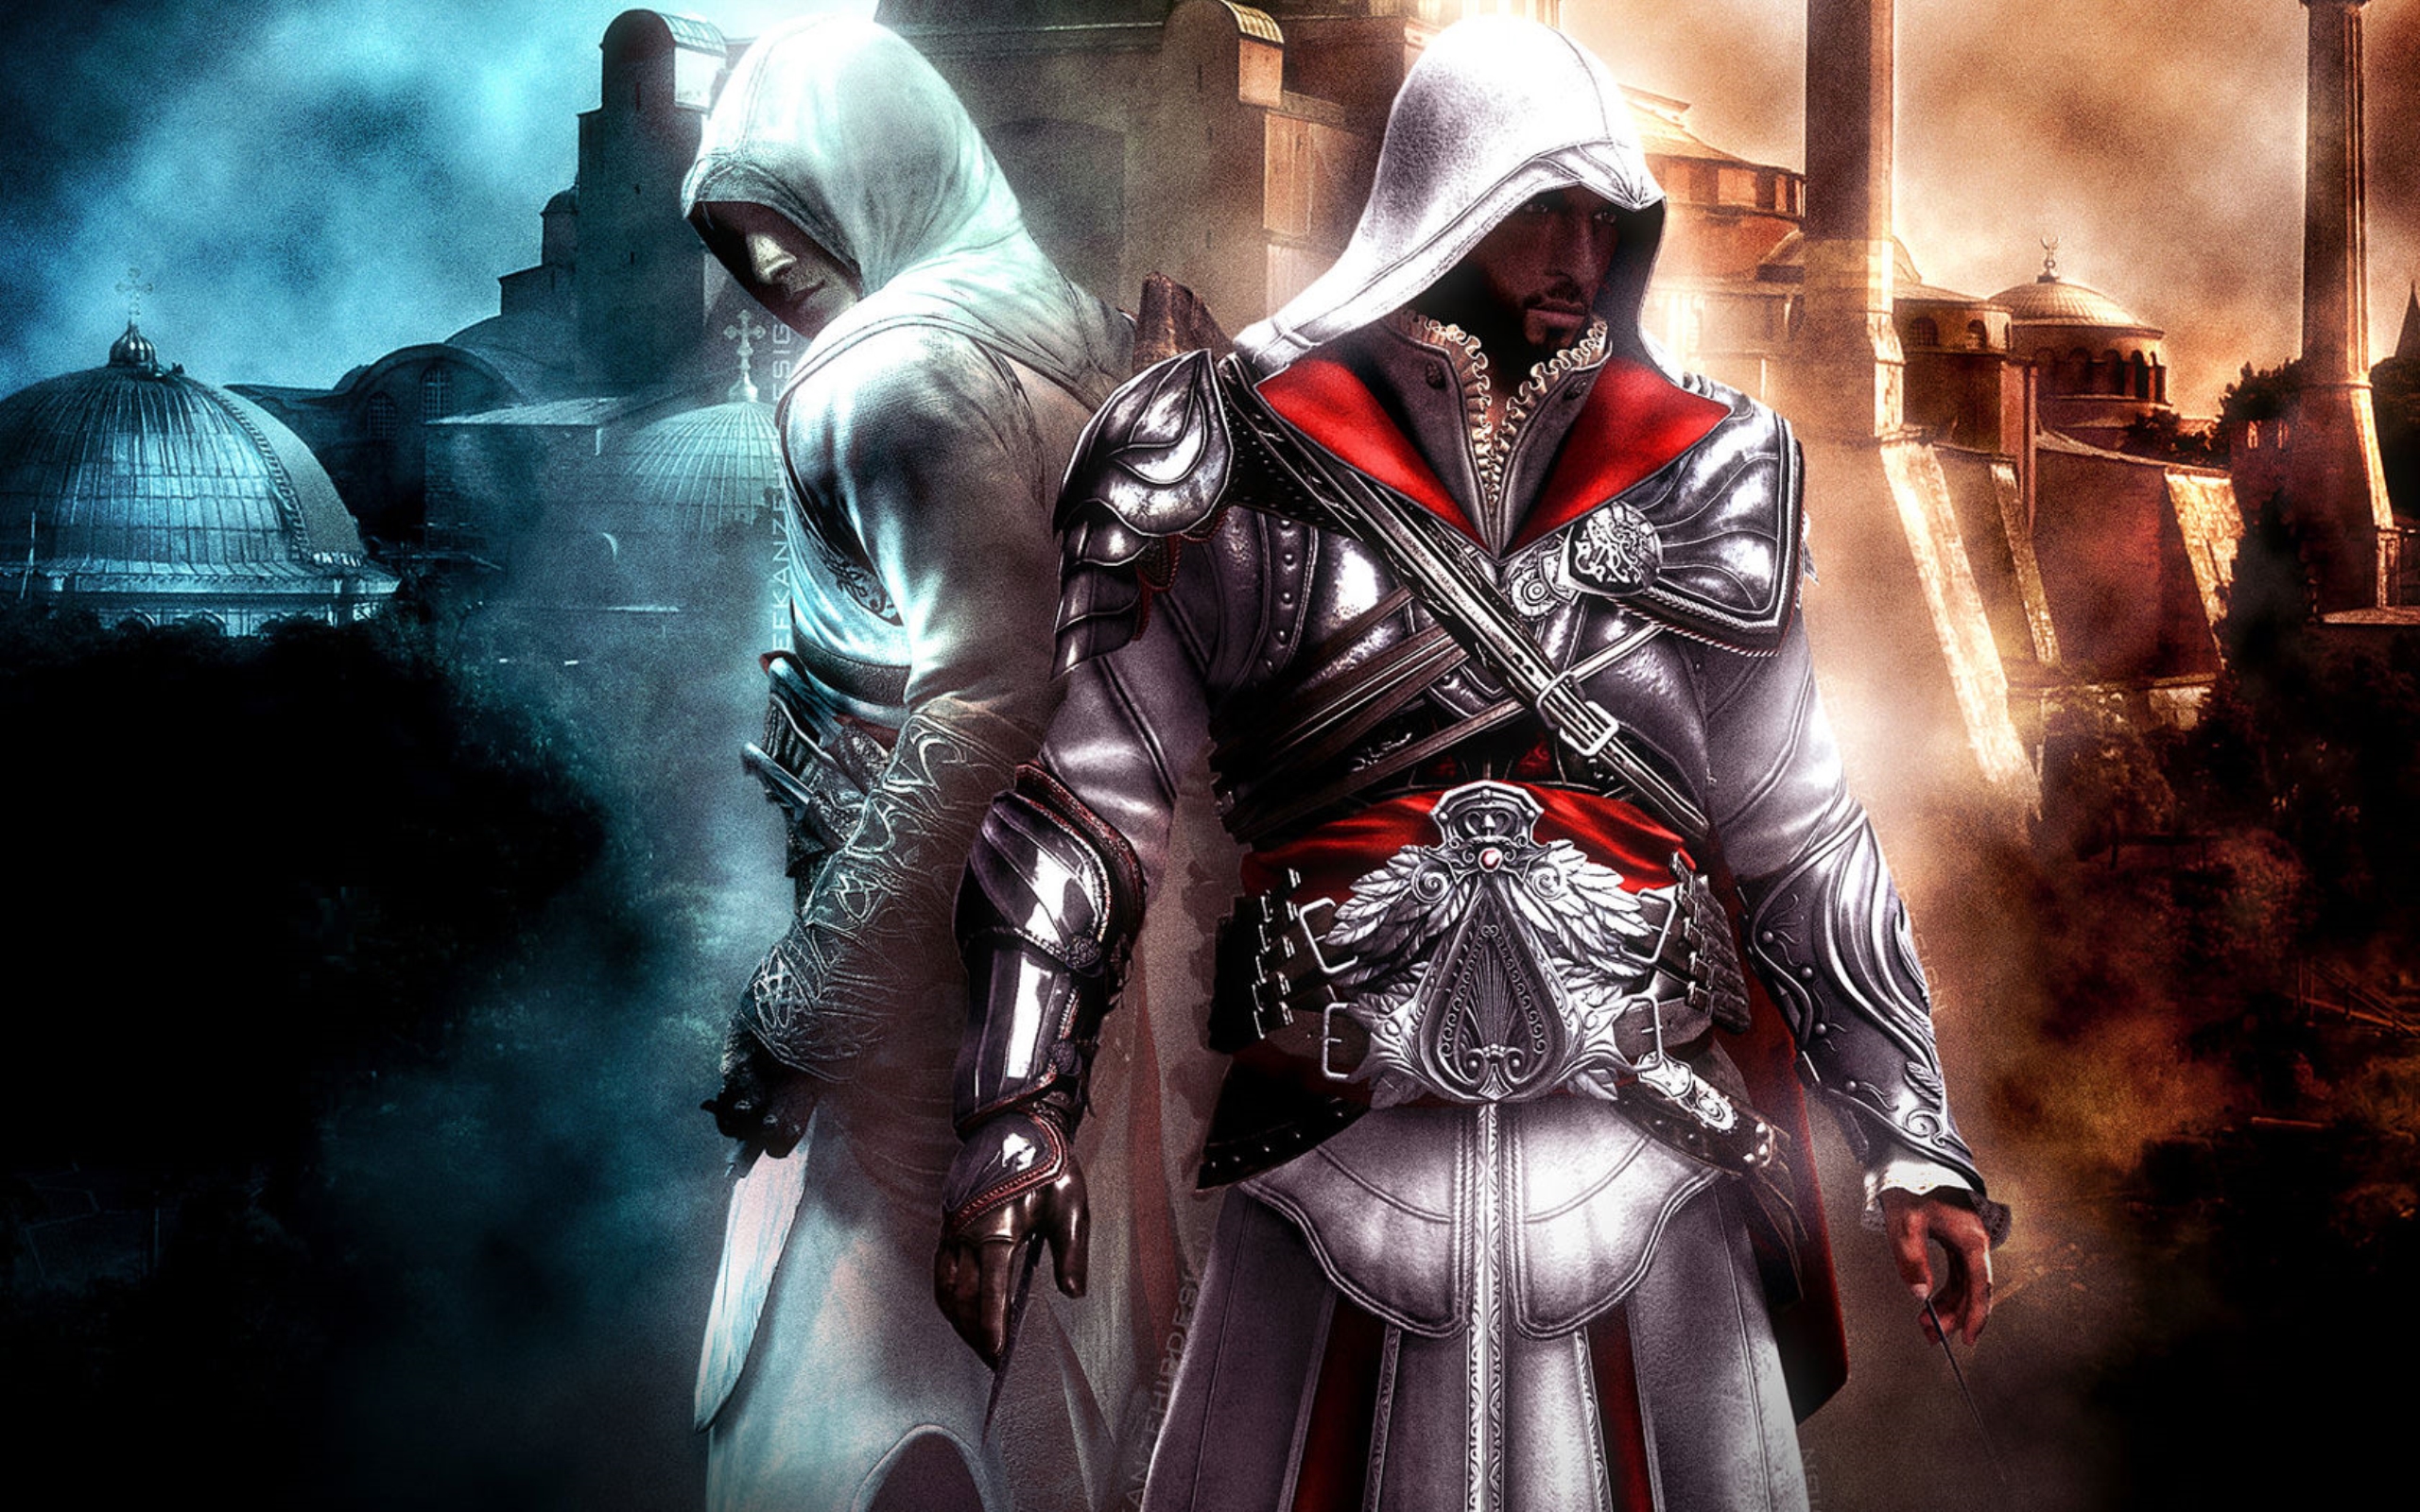 Assassins Creed Wallpaper HD